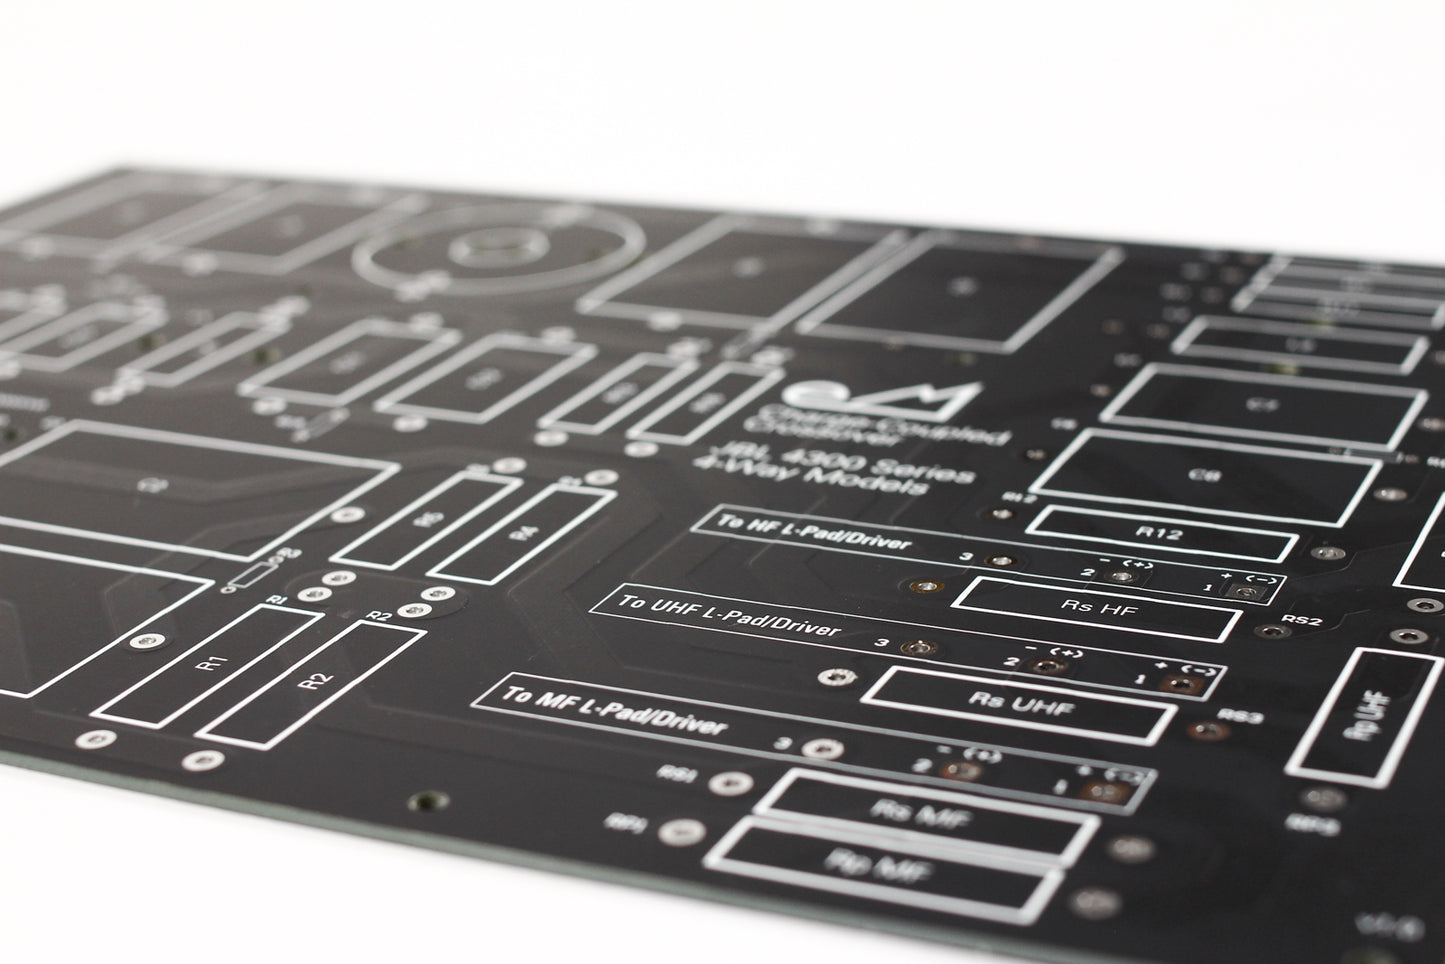 Full Board Set for JBL 4300 Series 4-way Models